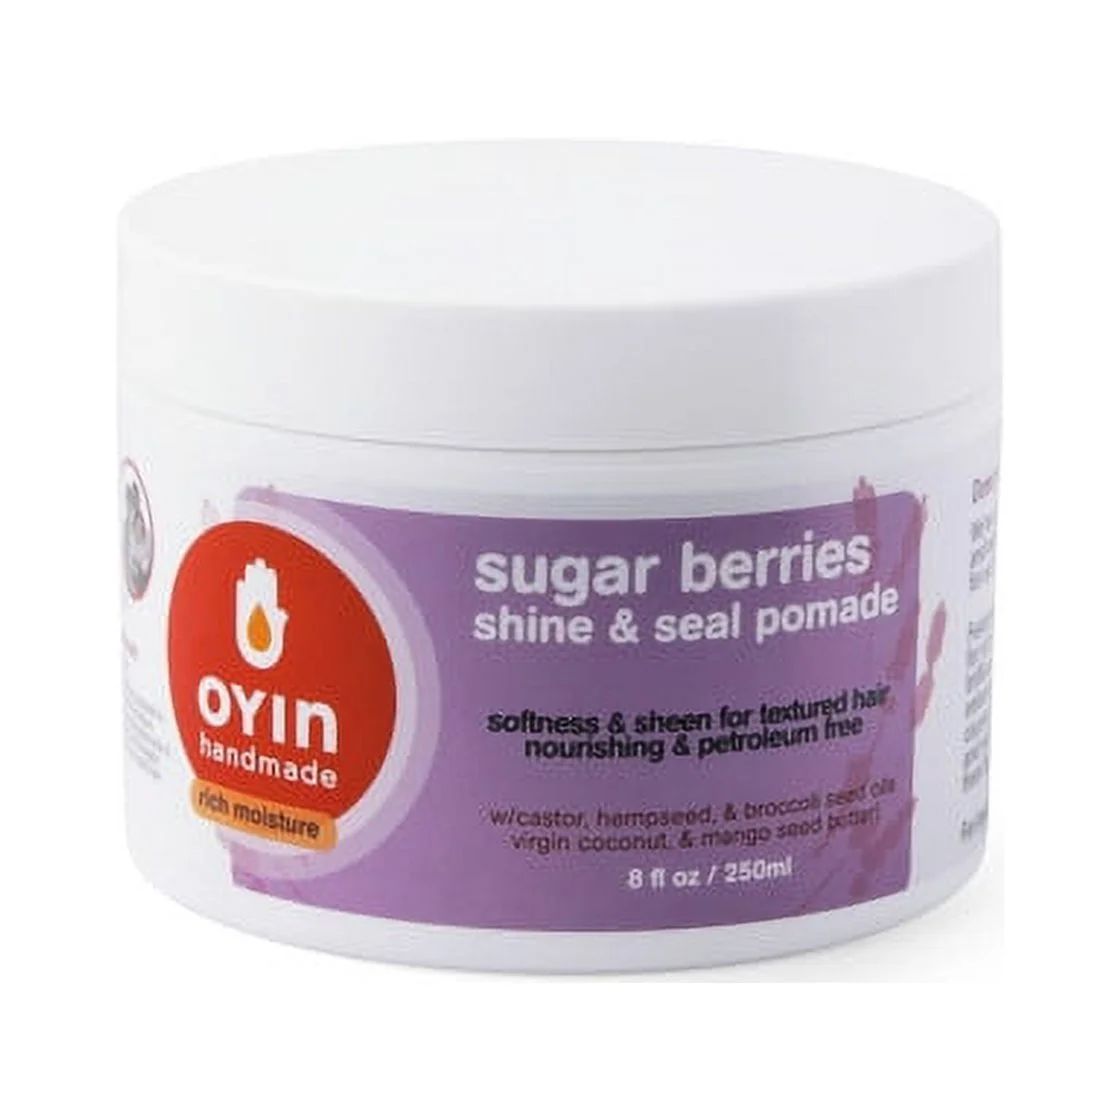 Oyin Handmade Sugar Berries ~ humectant hair pomades | Walmart (US)